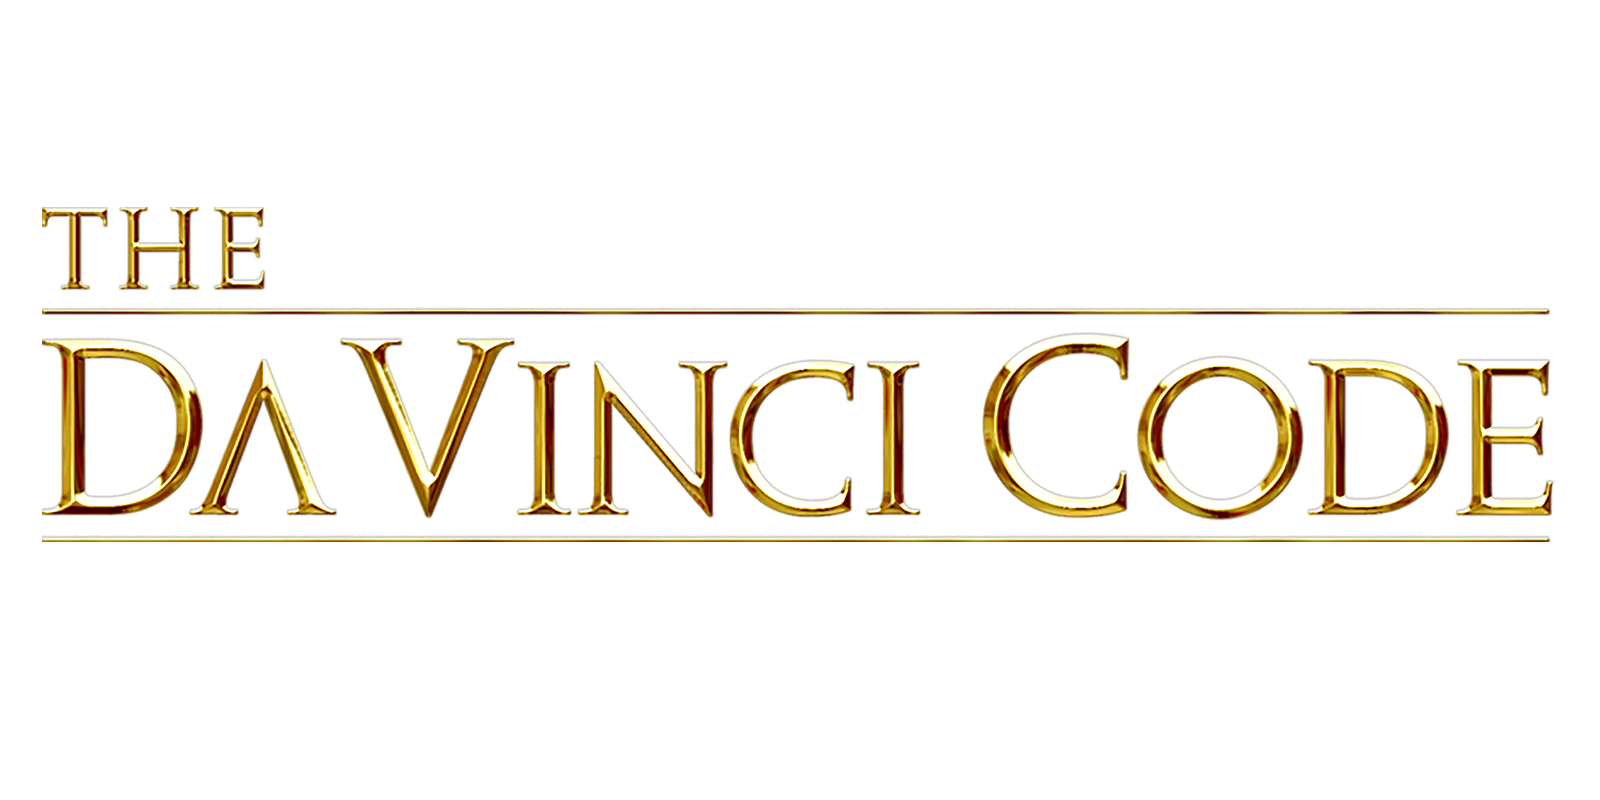 the da vinci code movie online with english subtitles